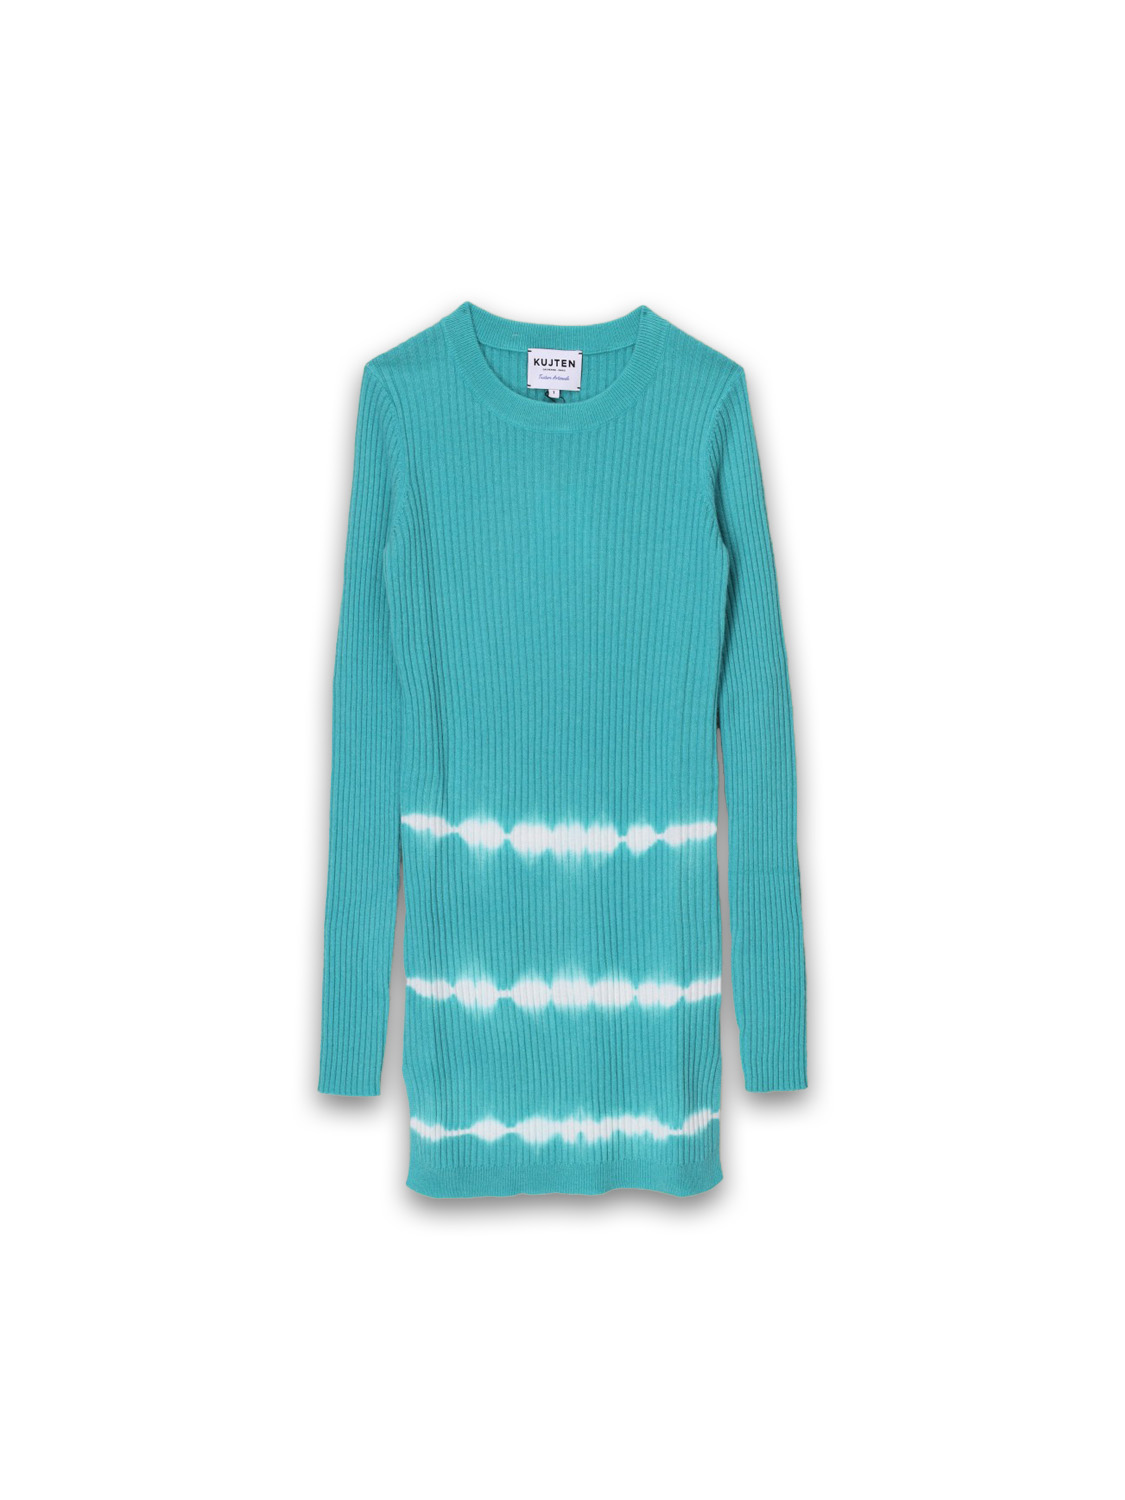 Kujten Bibili – Langer Ripp-Pullover aus cashmere mit Batik-Details 	  menta M/L